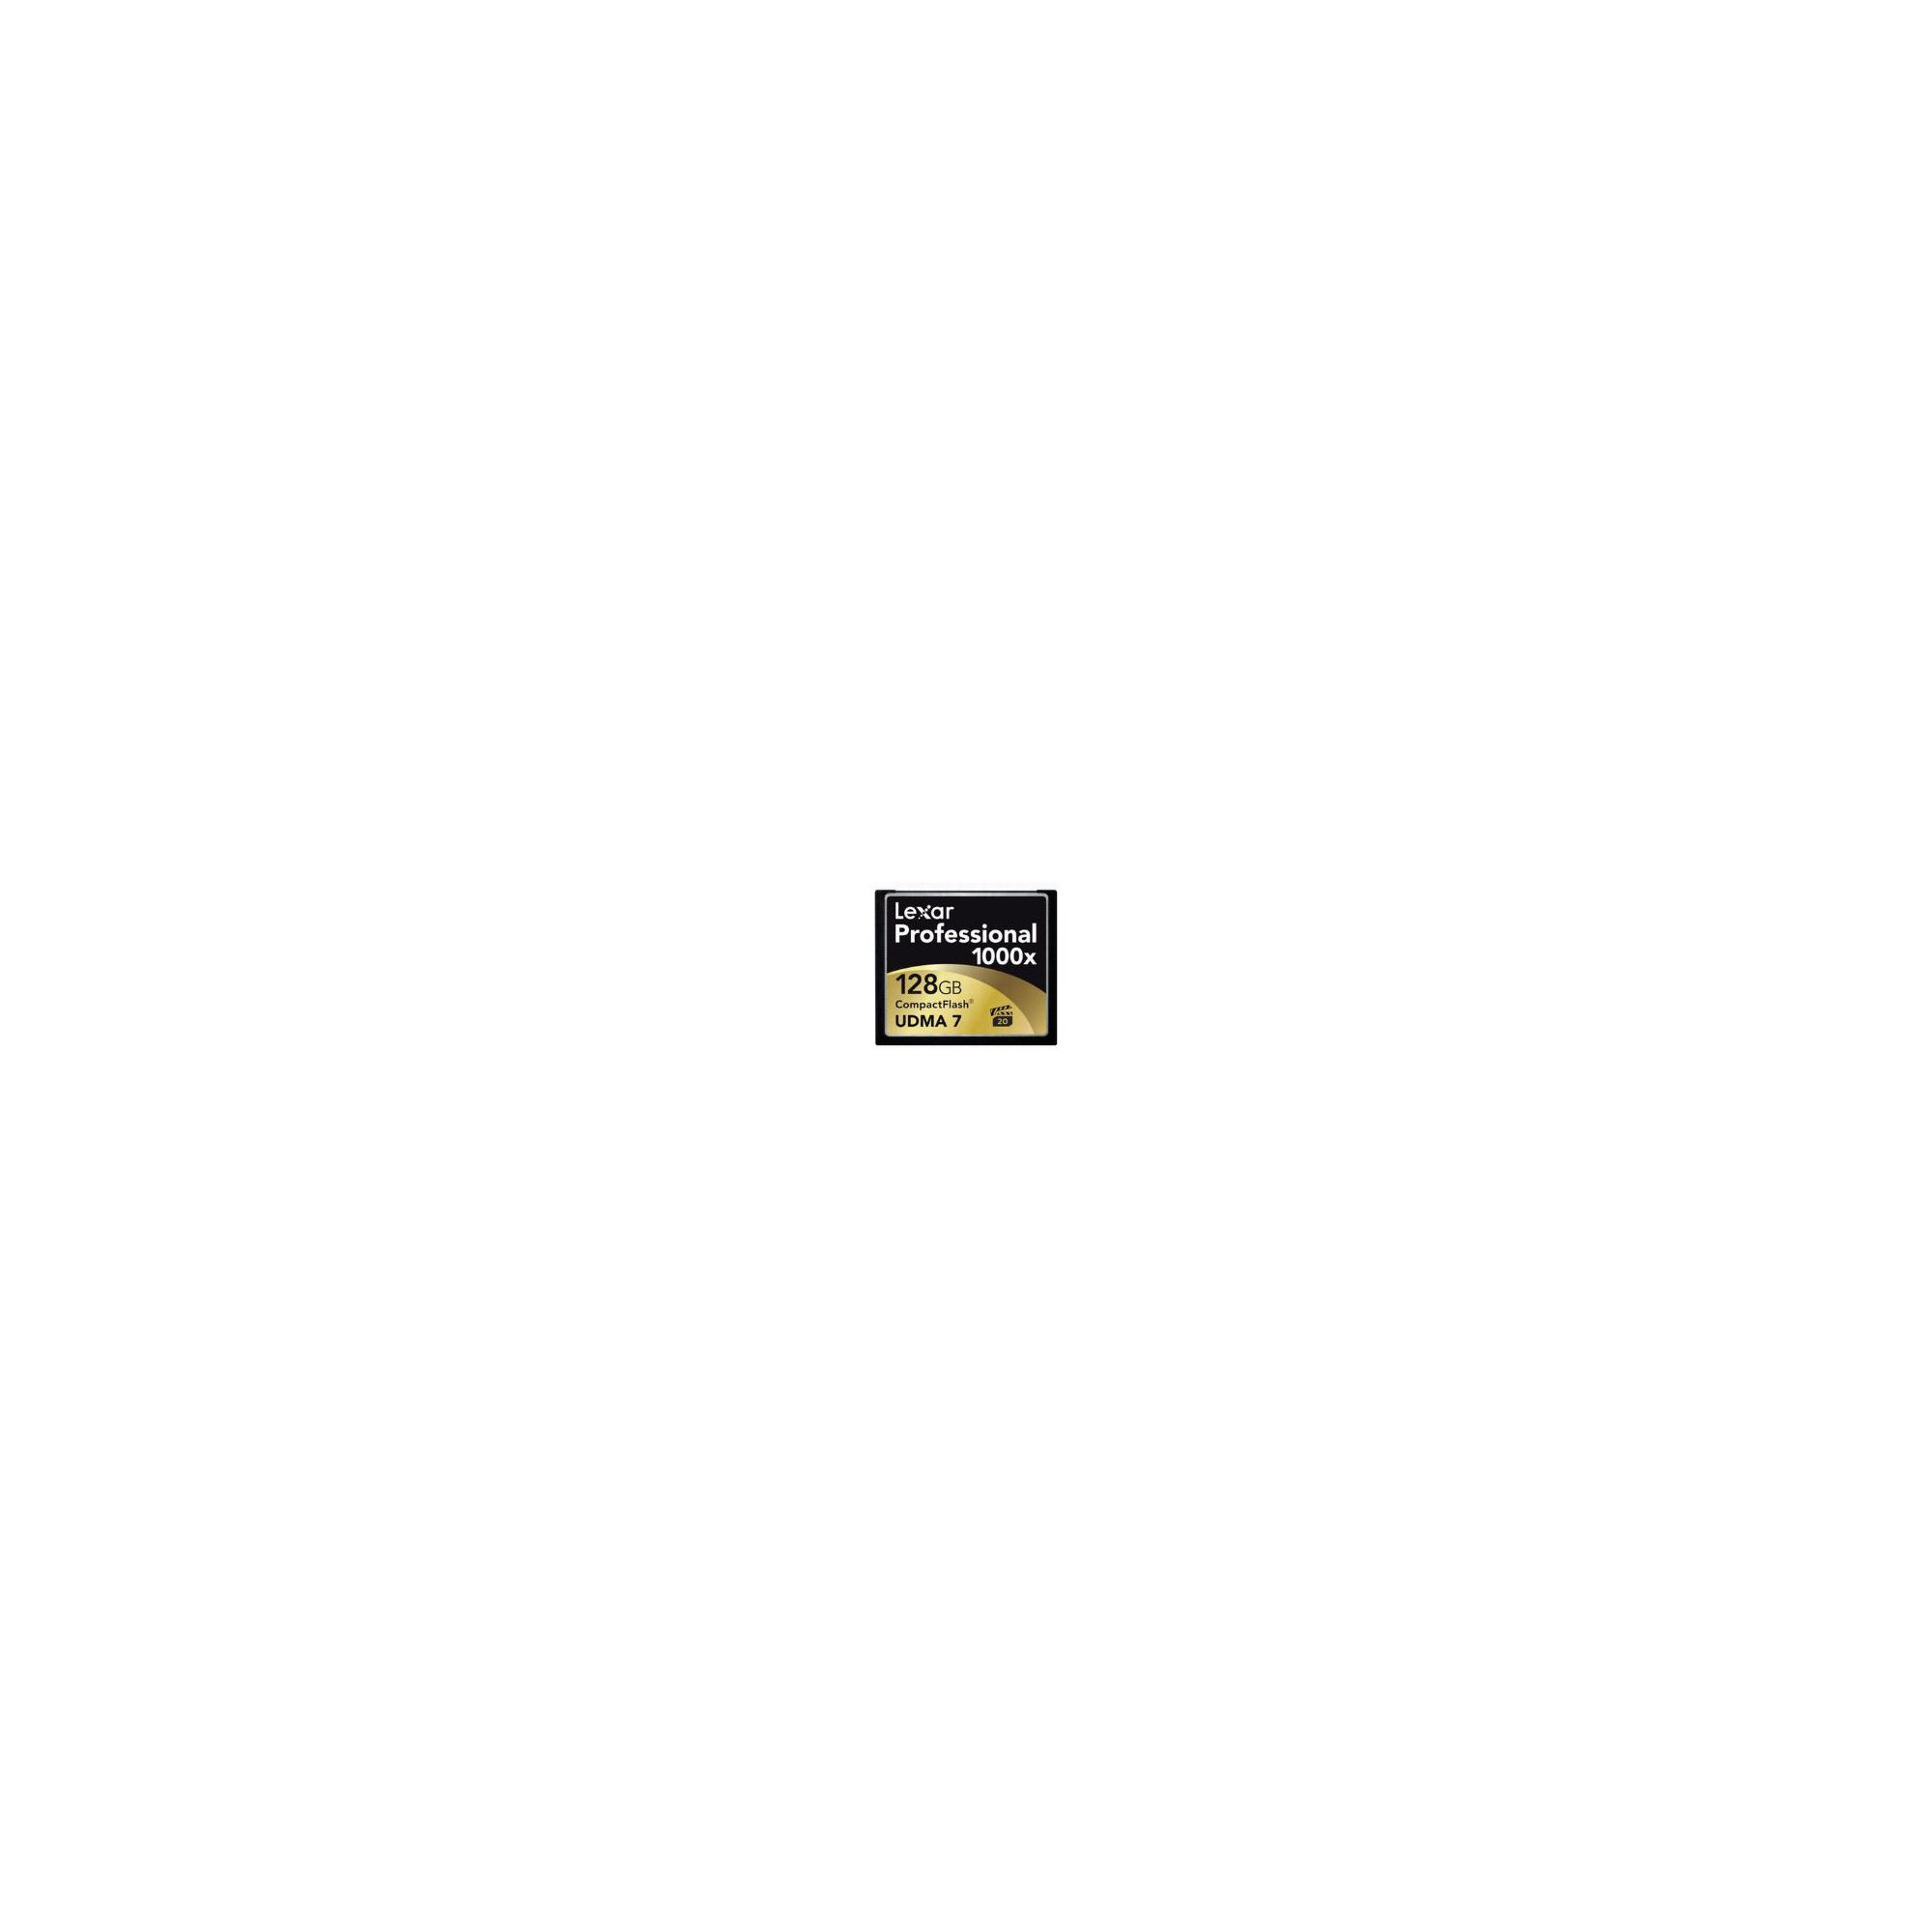 Corsair Flash Voyager Slider (32GB) USB 3.0 Flash Drive at Tesco Direct